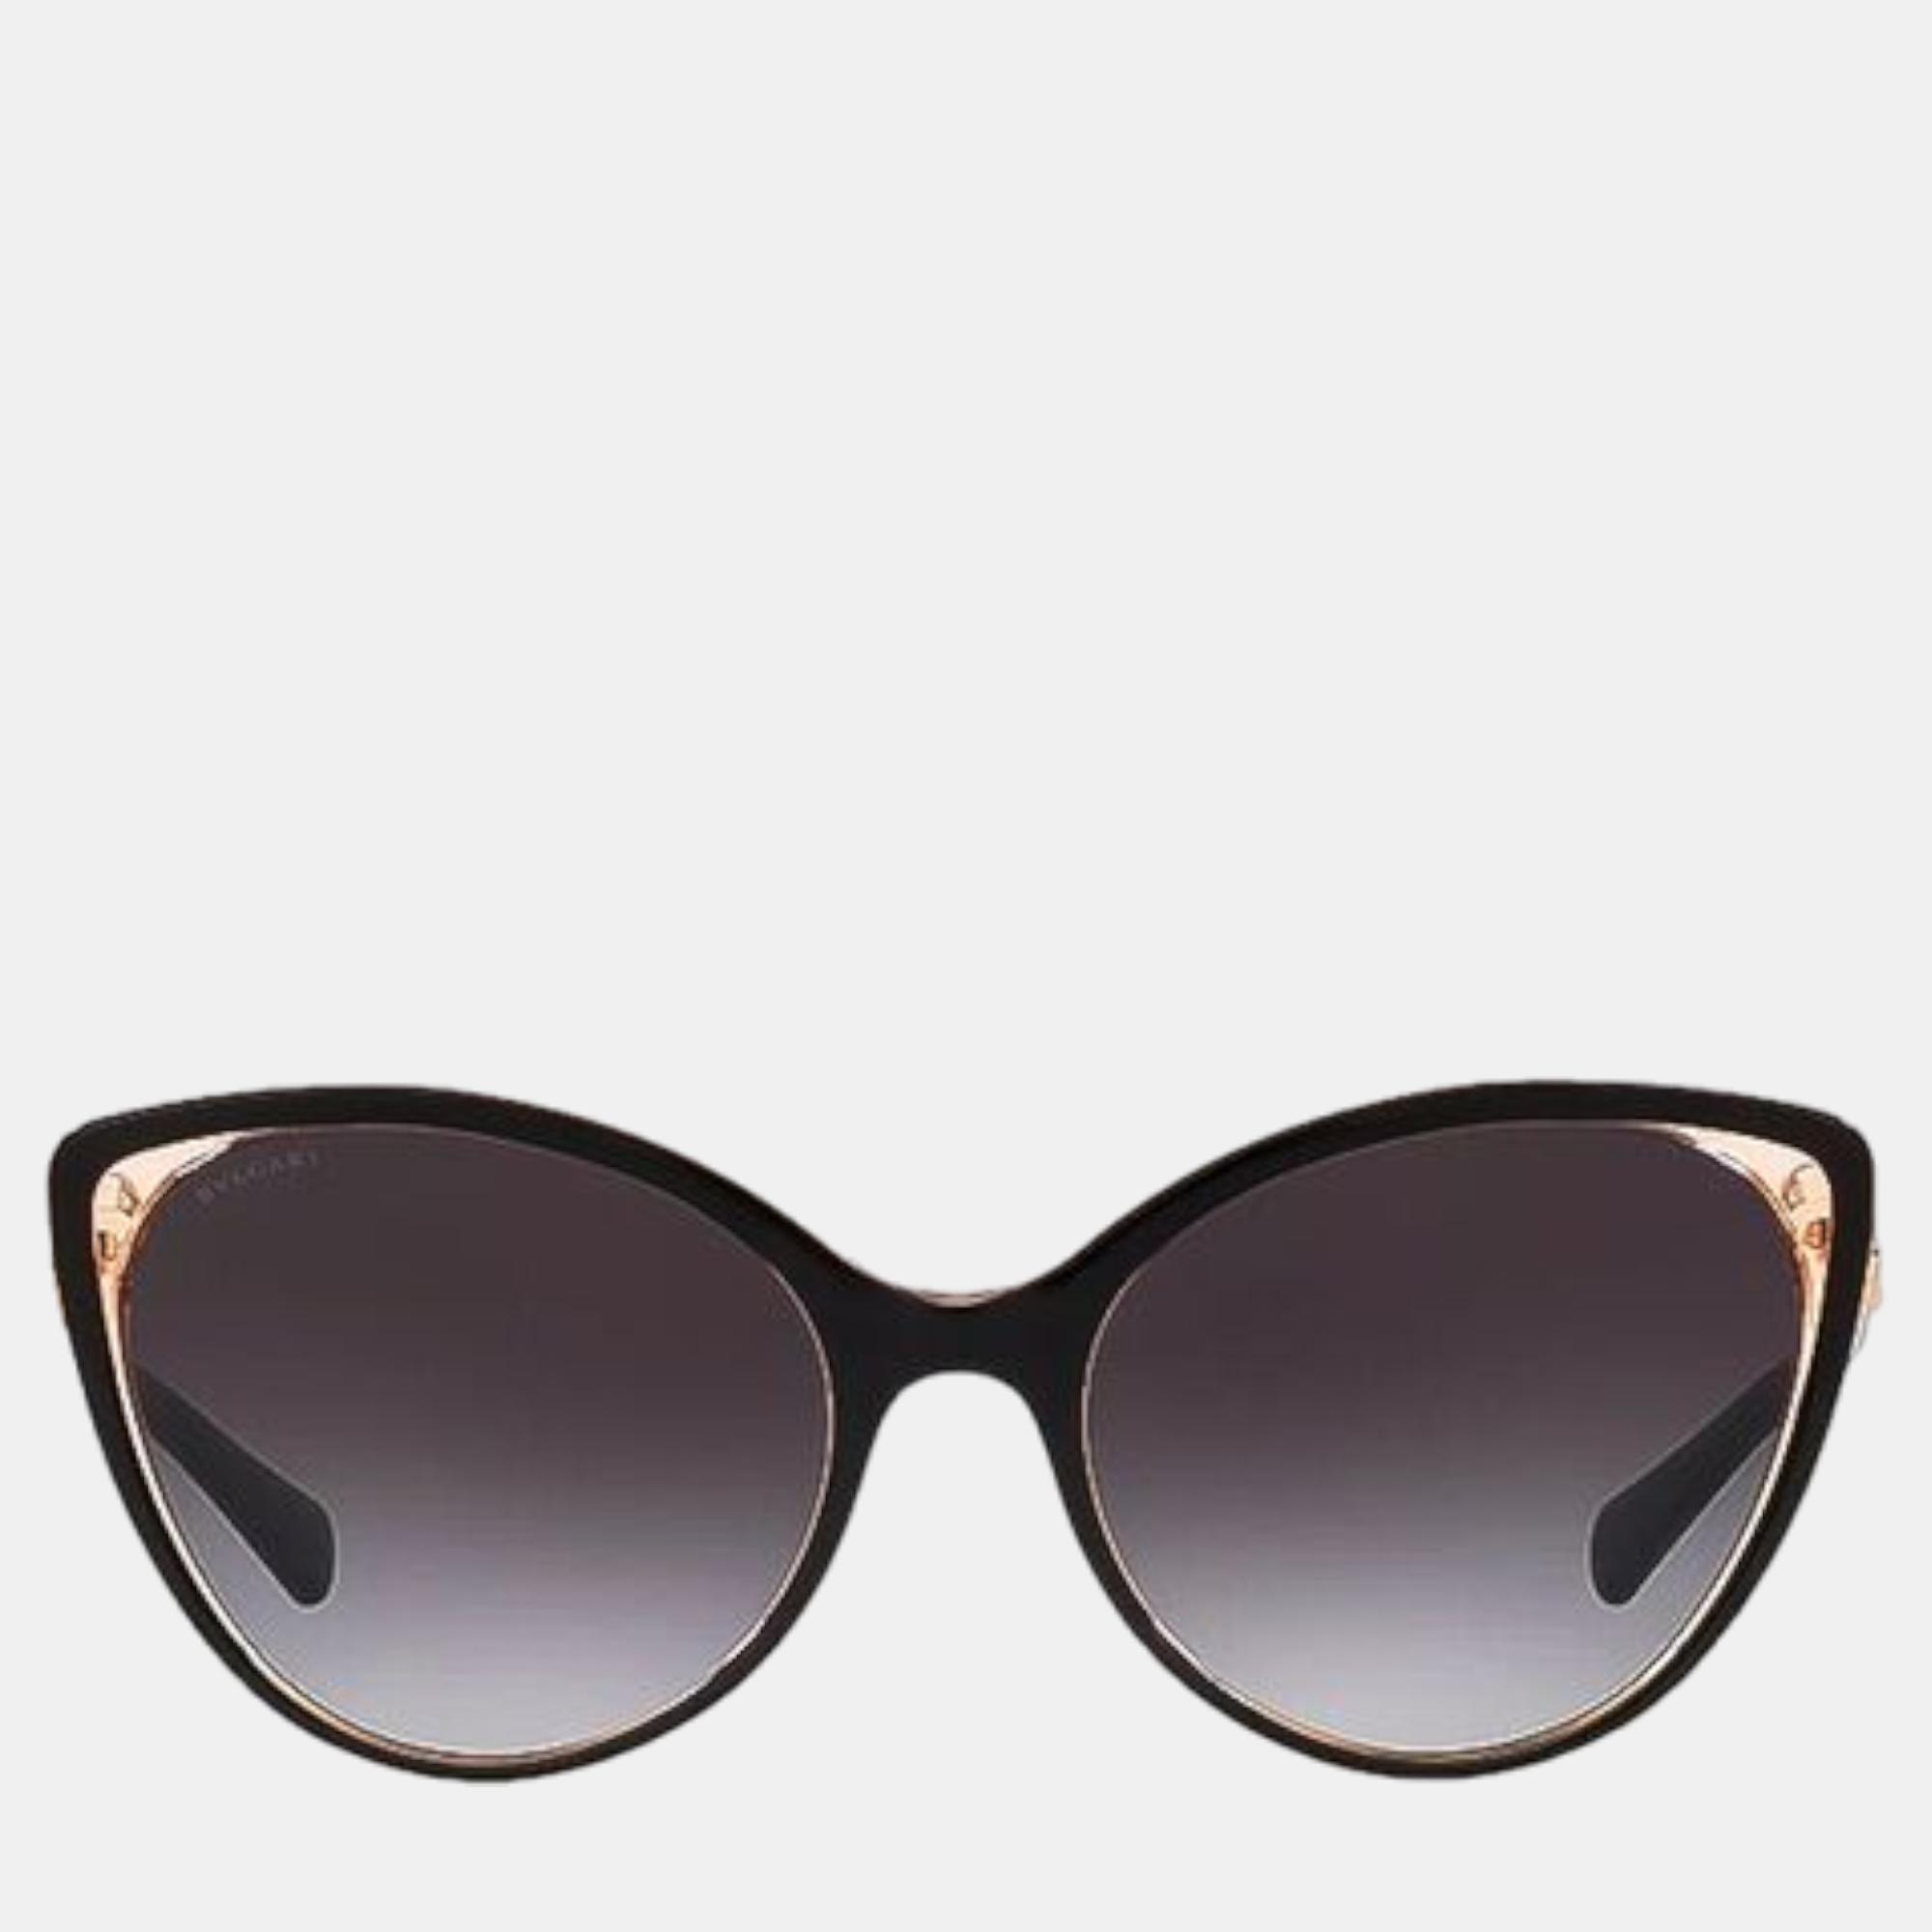 Bvlgari black full rim sunglasses